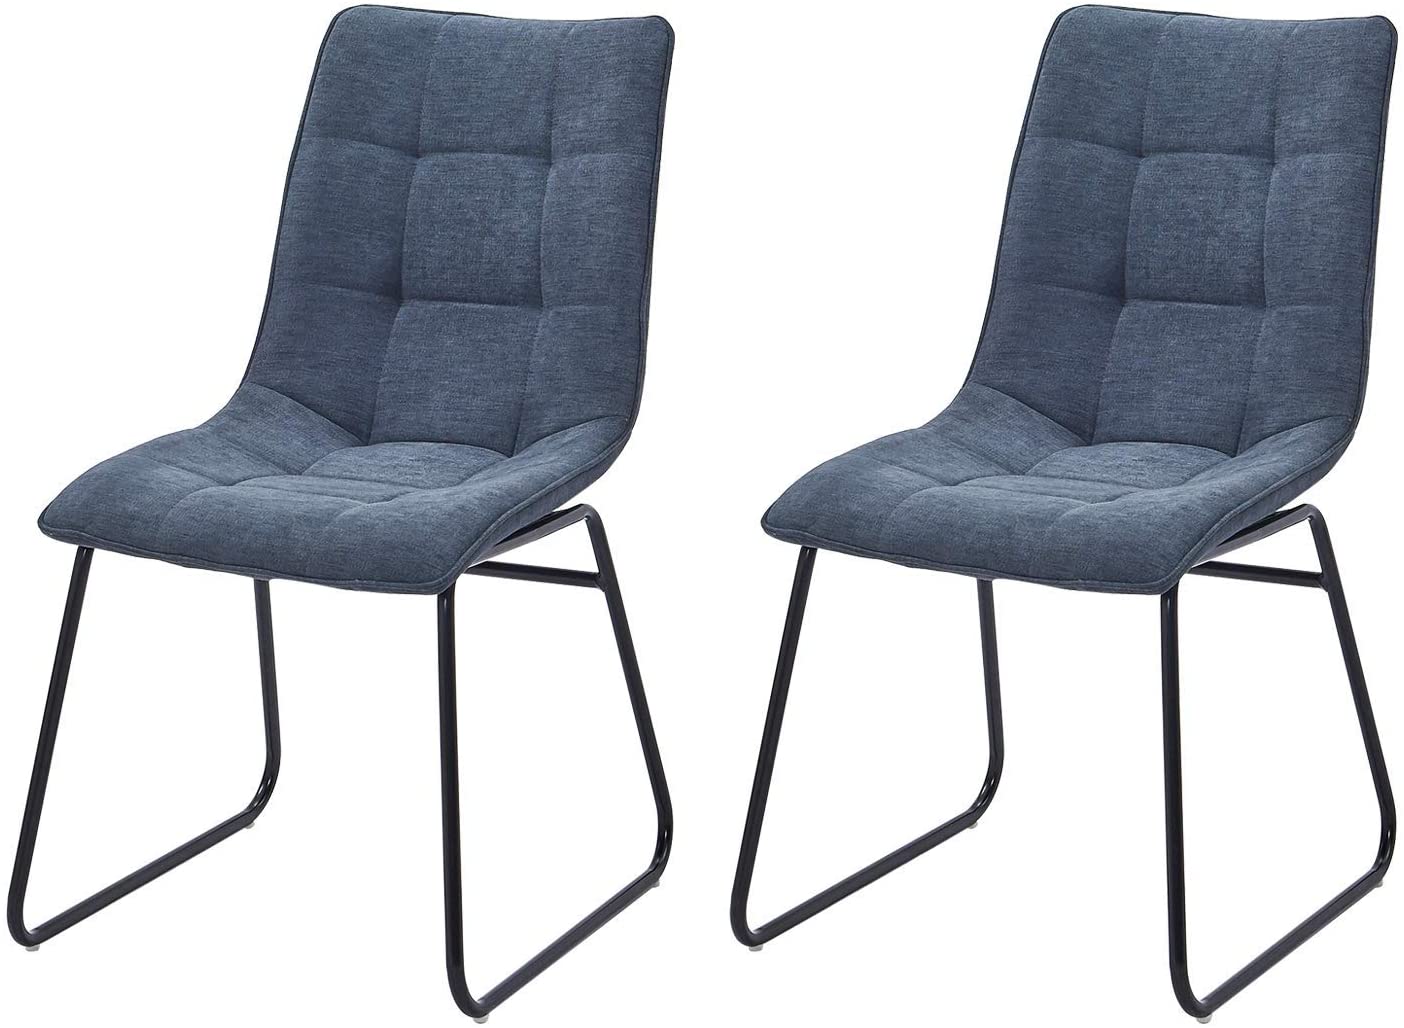 B087B93XVQ ZHONGQI Comfortable Set of 2 Ice Blue Mid-Back Lounge Dining Chairs Fabric Soft Seat Metal Leg for Living Kitchen Dining Room Scandinavian Style,Colour:Purplish Blue (Color : Purplish Blue)